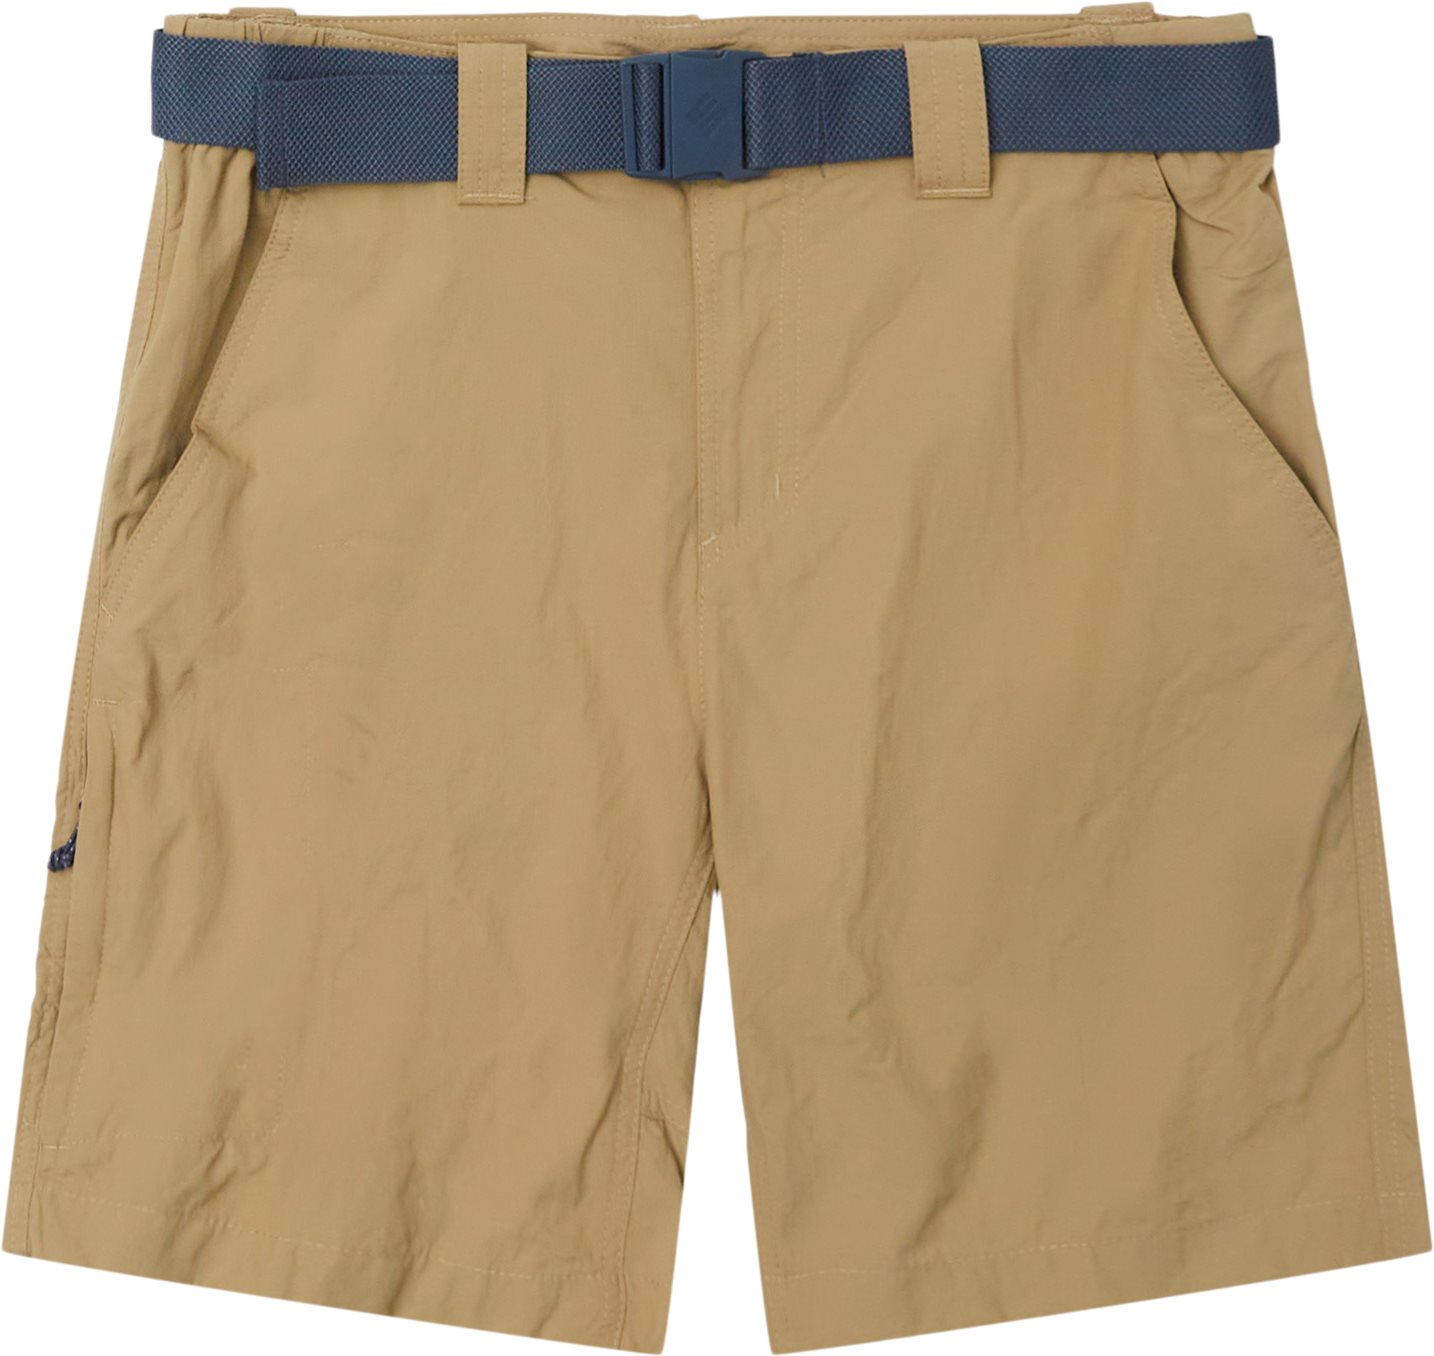 Silver Ridge II Shorts - Shorts - Regular fit - Sand